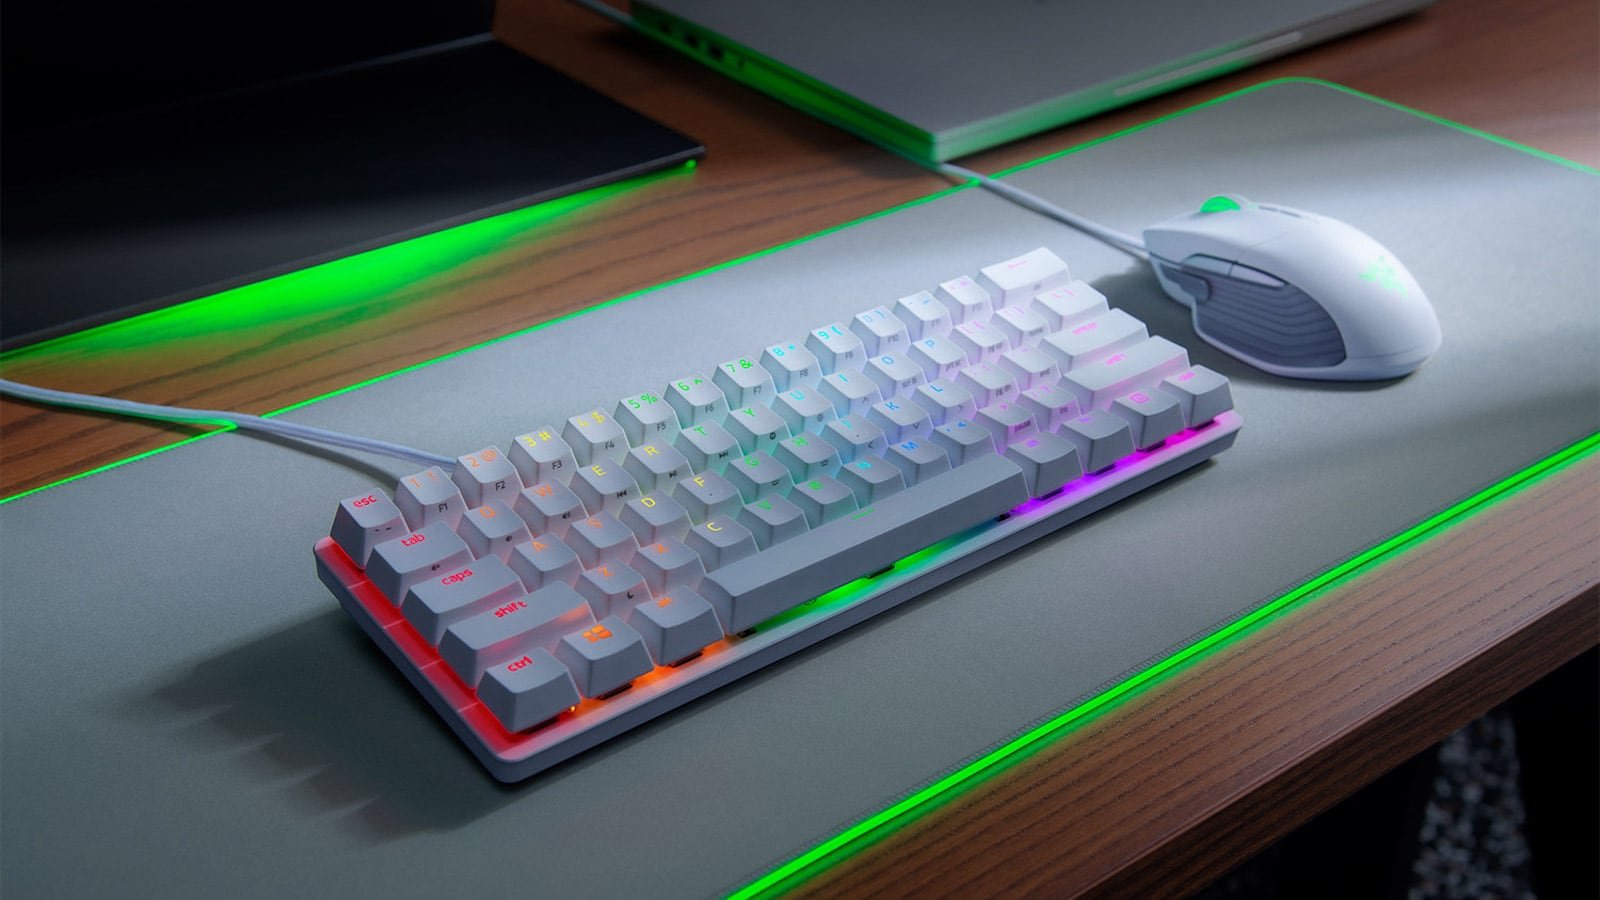 Razer Huntsman Mini Portable Gaming Keyboard uses cutting-edge Optical Switches